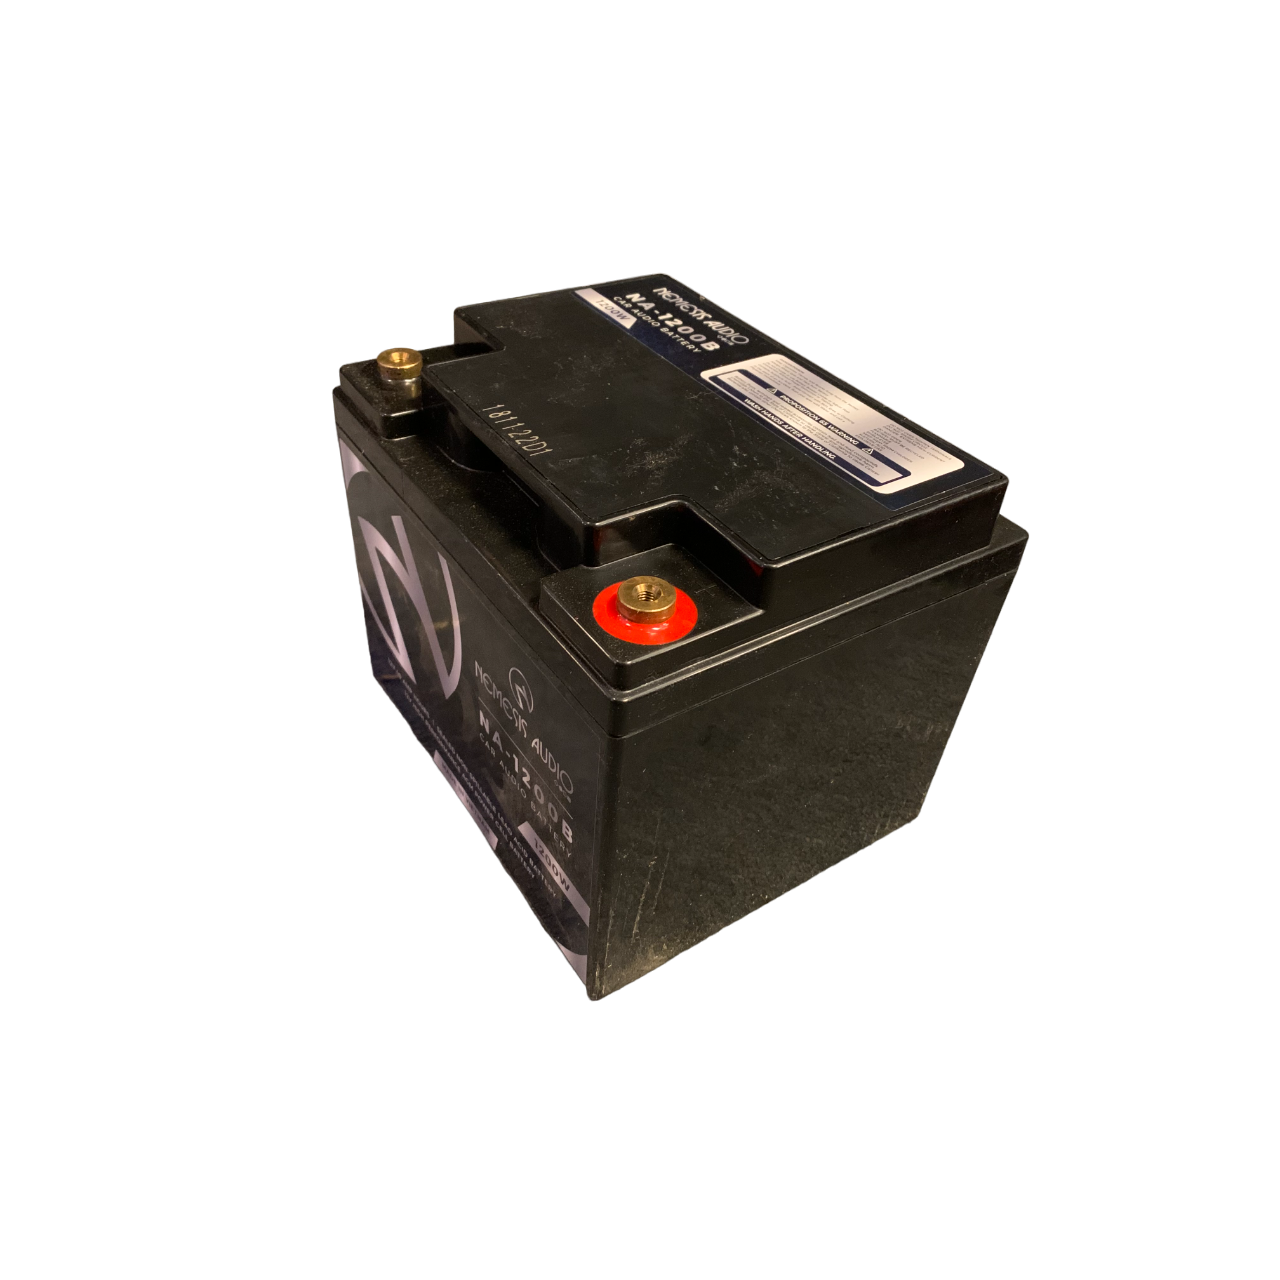 Nemesis Audio NA-1200B 40 AH 1200 Watts AGM Power Cell 12-Volt Battery